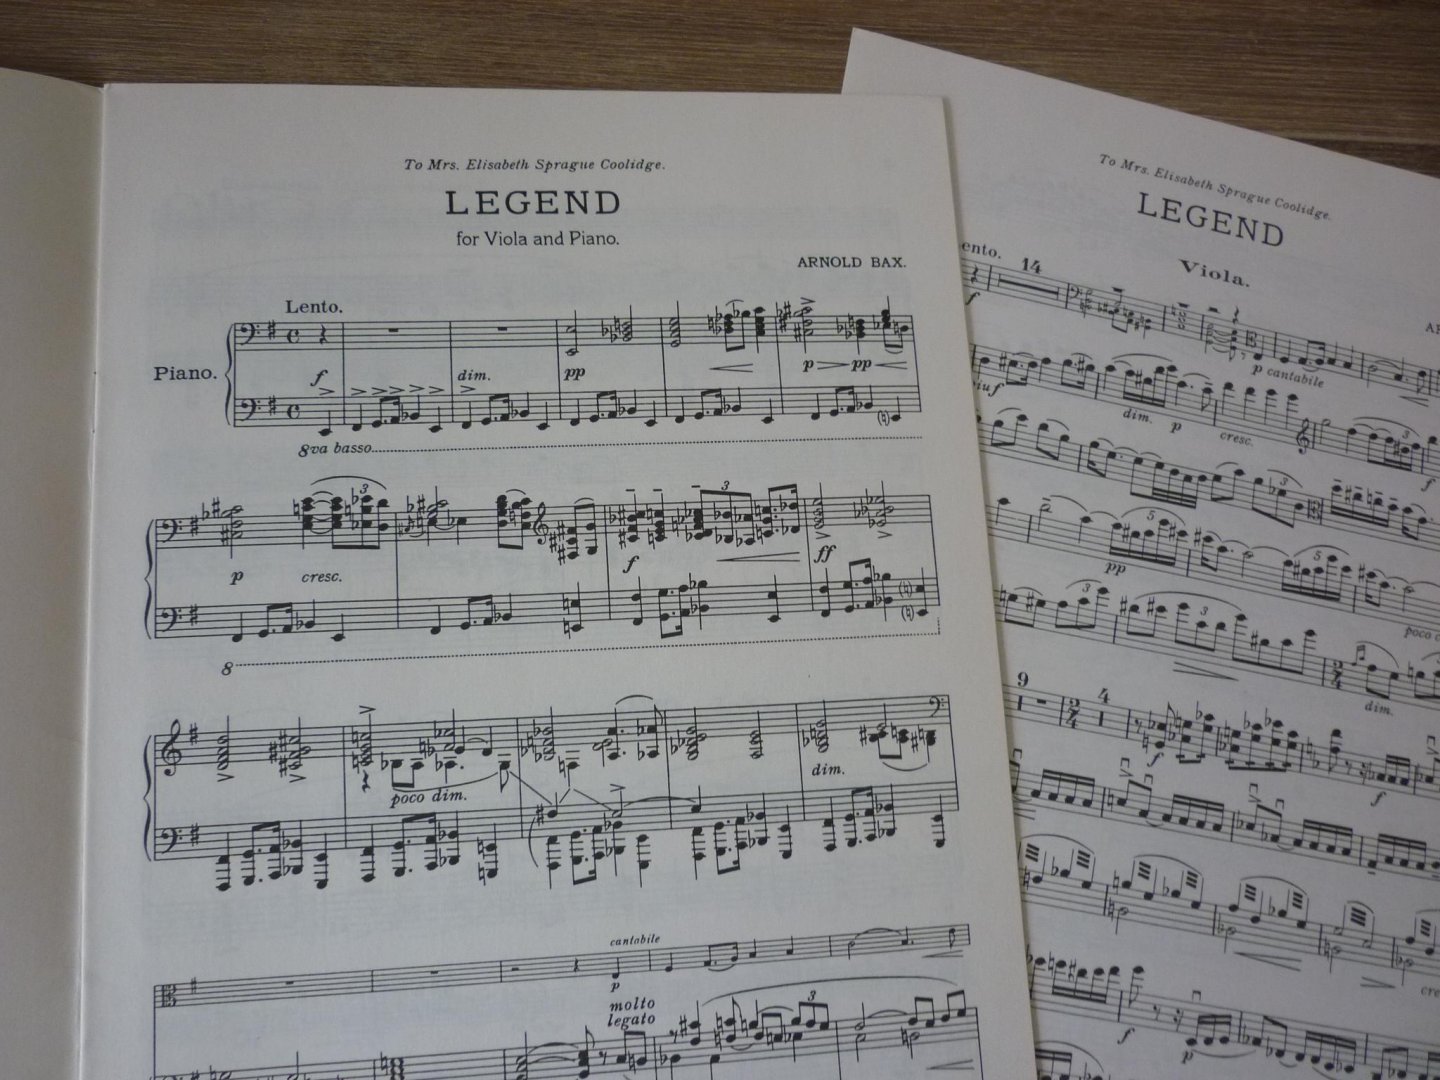 Bax; Arnold - Legend for Viola & Piano - Centenary Edition